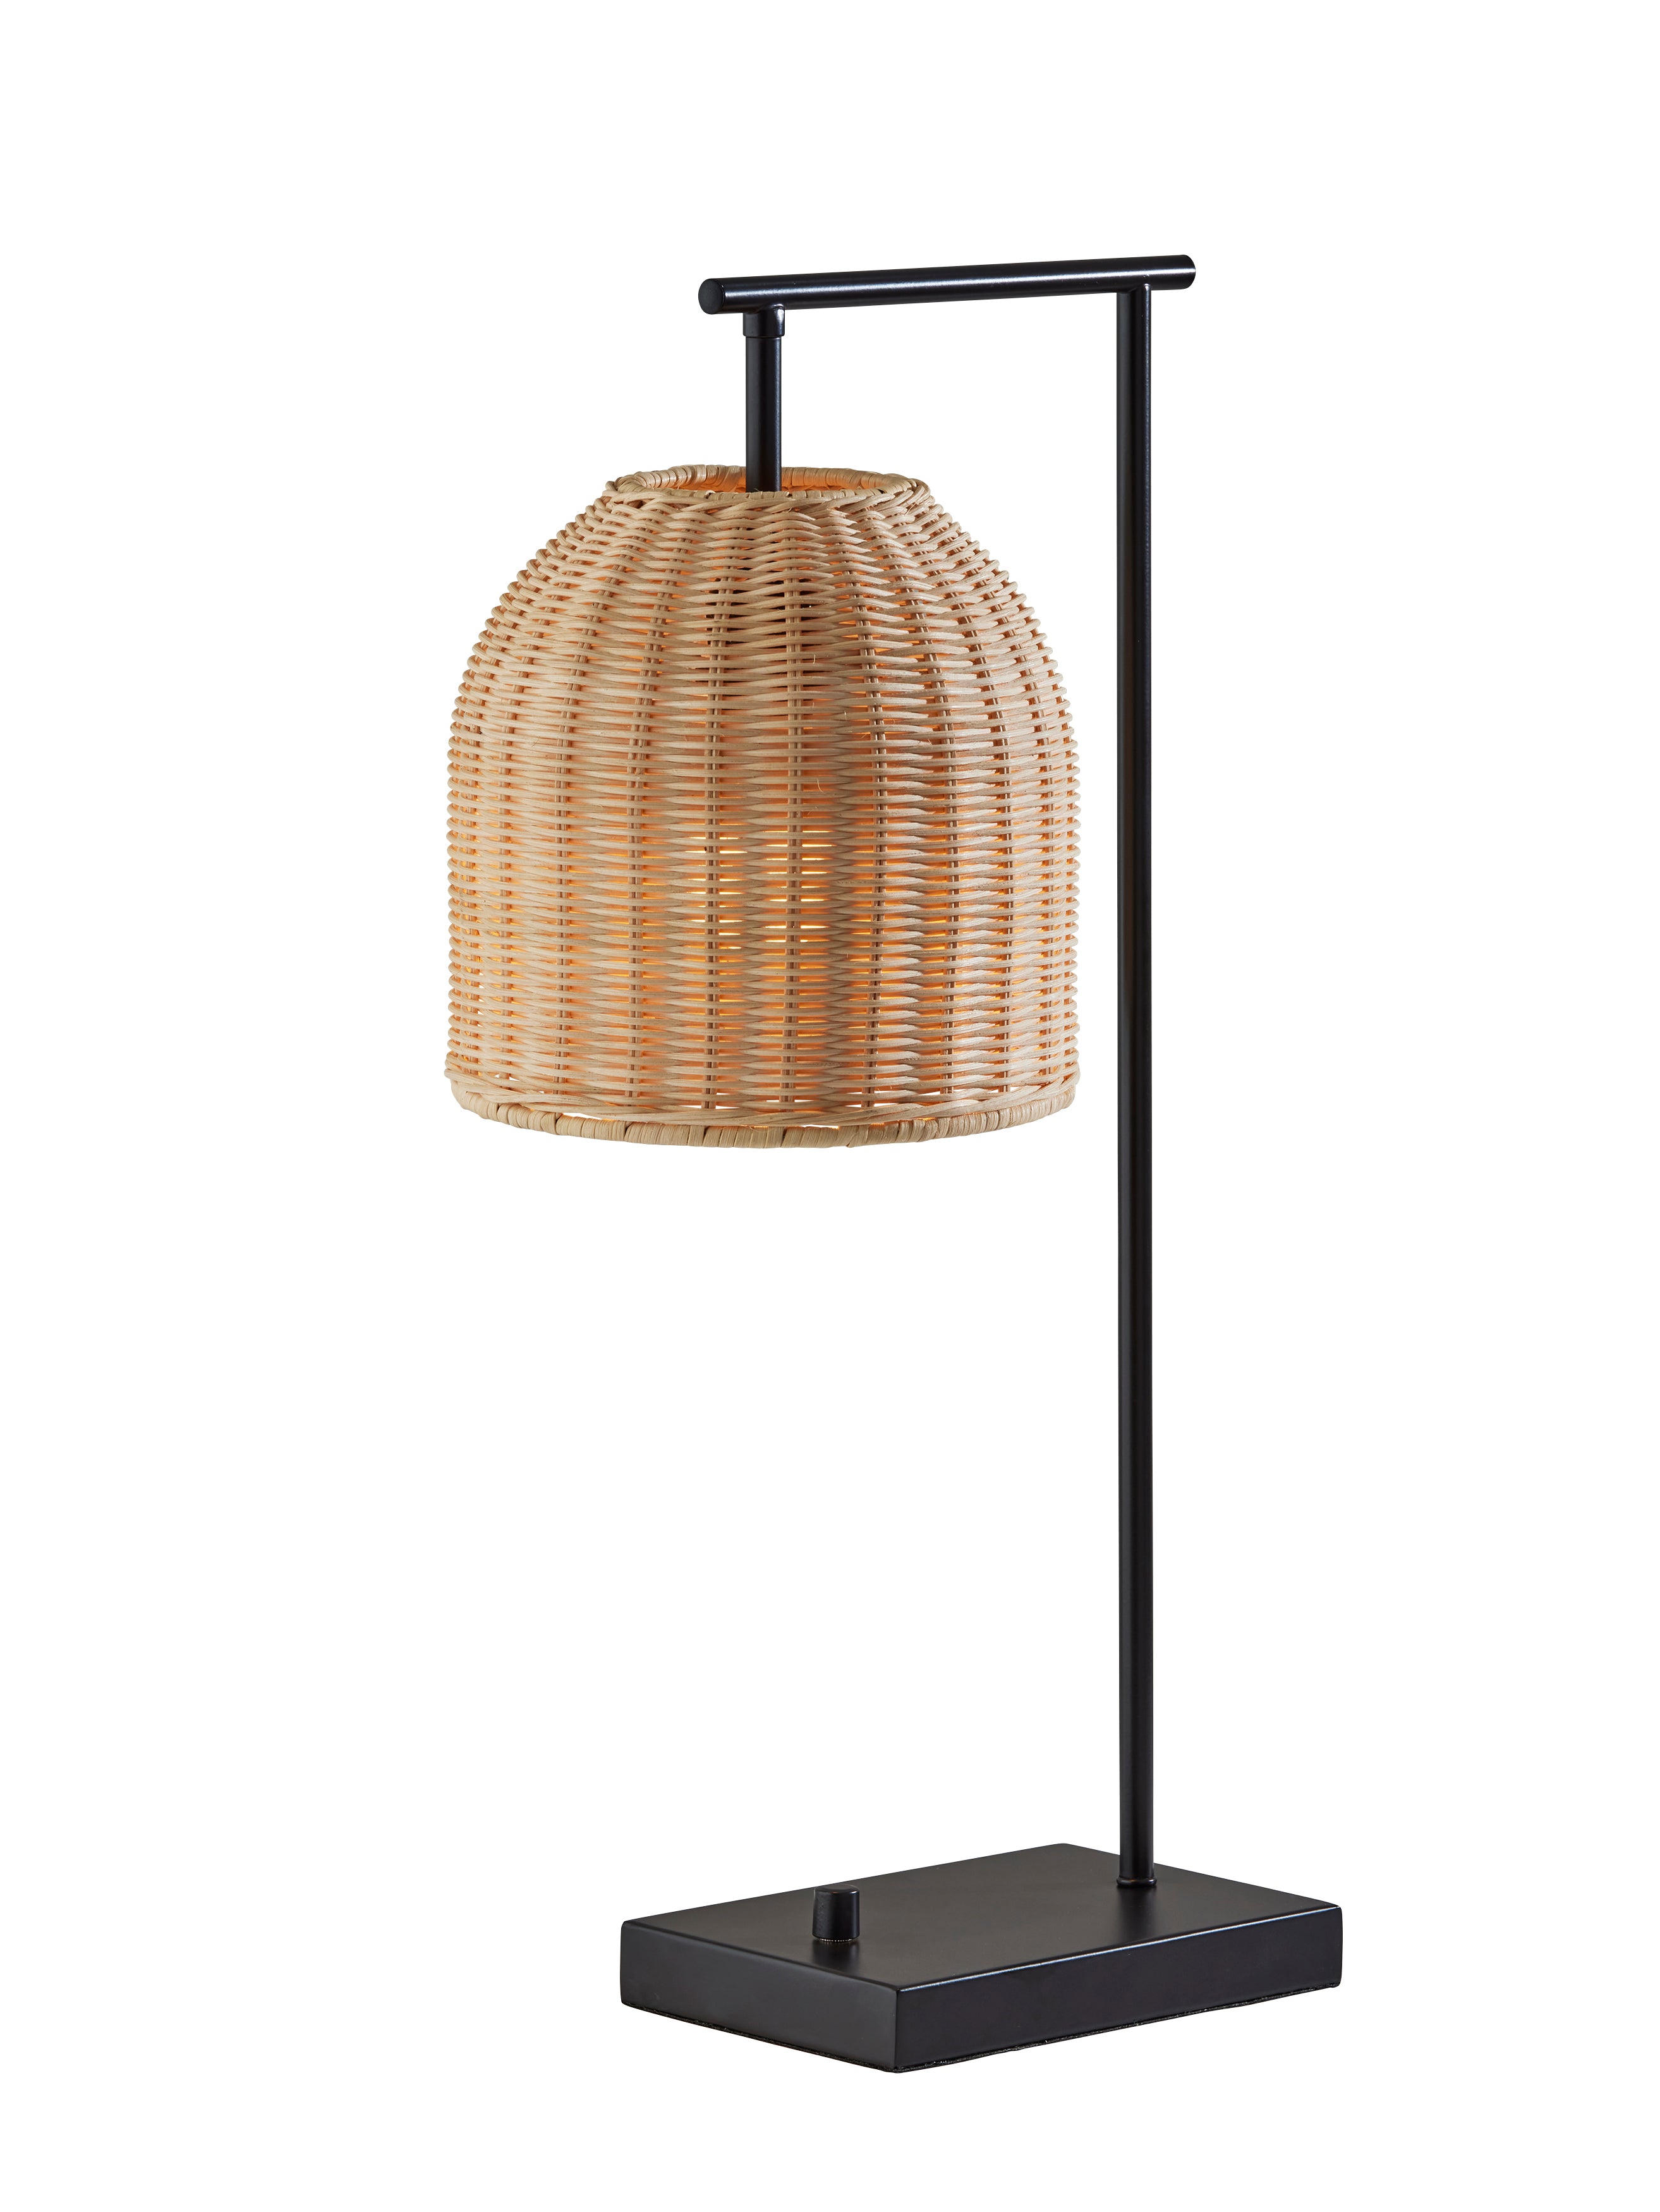 BAHAMA Table lamp Bronze - 4331-26 | ADESSO